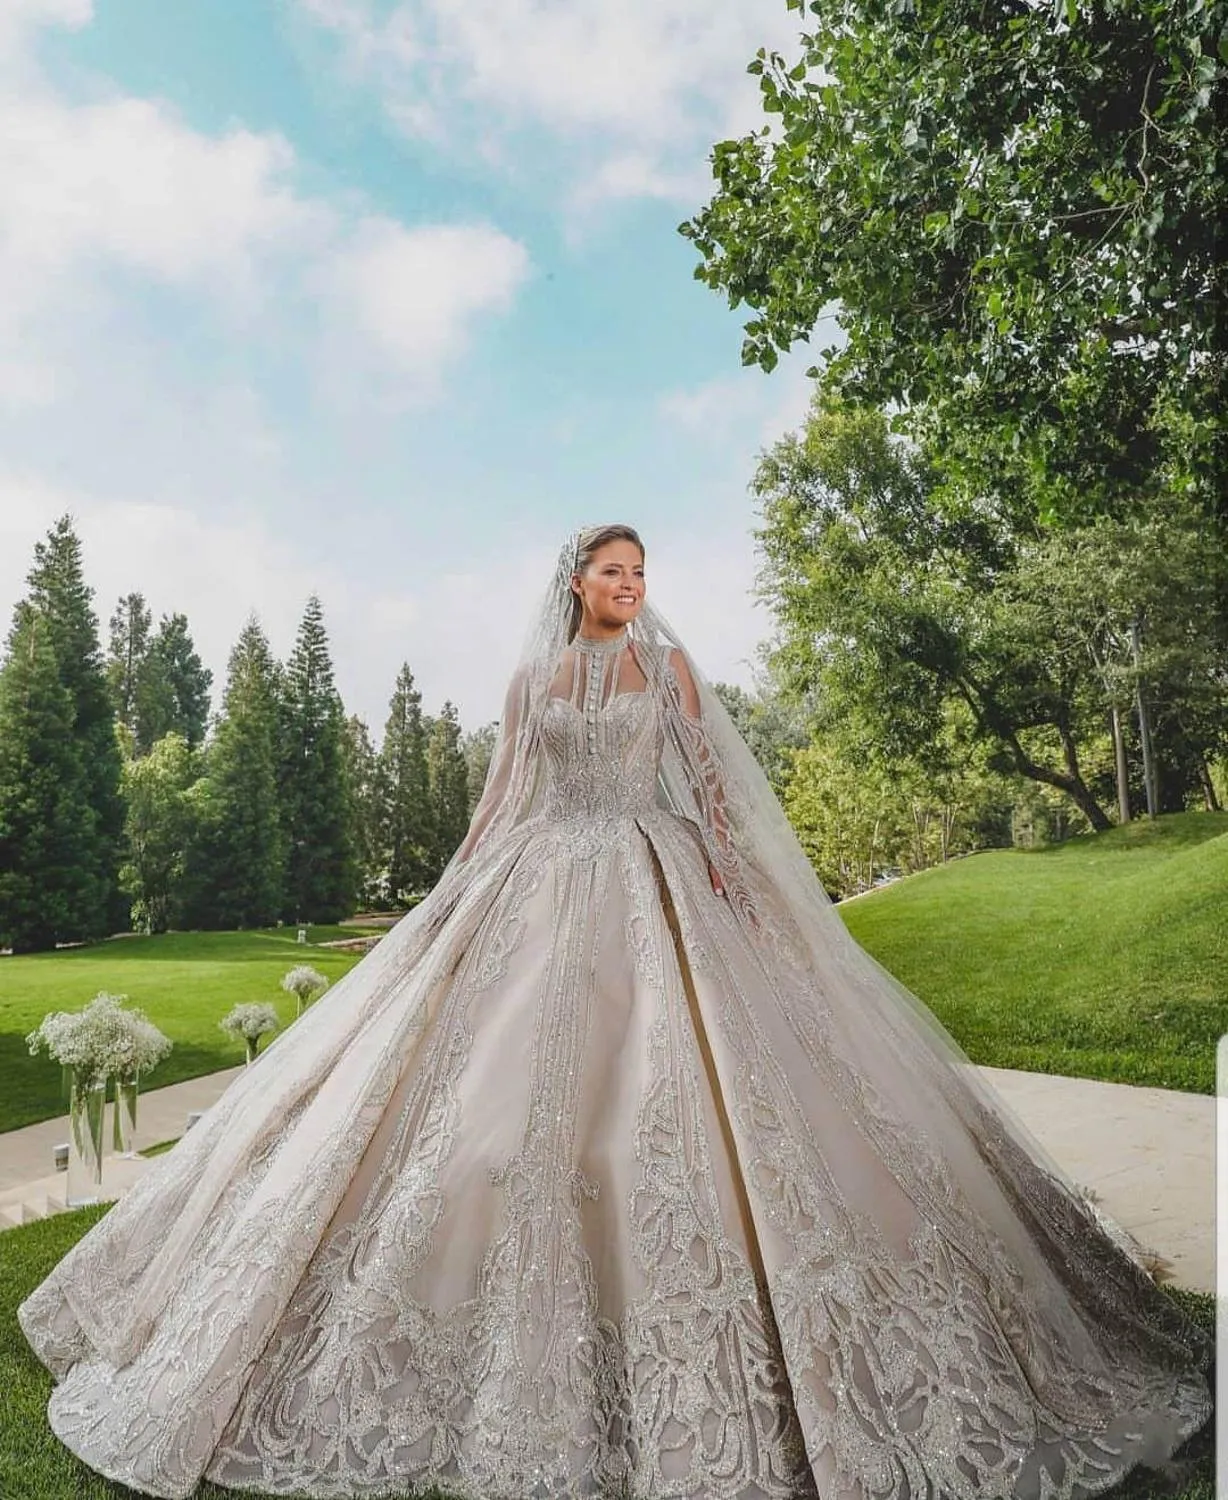 The decade's dreamiest wedding dresses by Arab designers | Arab News